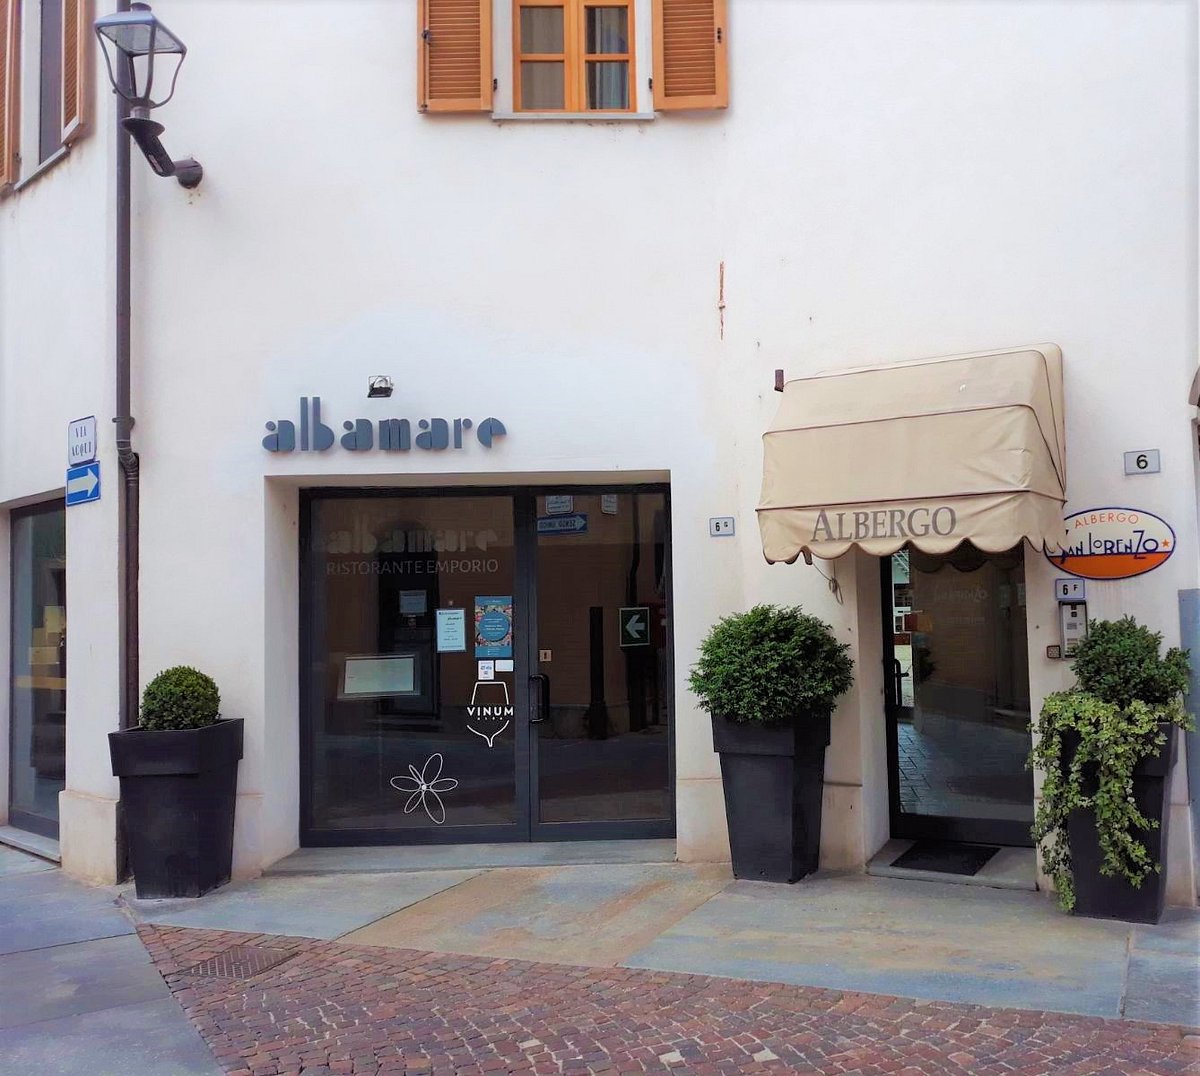 Albergo San Lorenzo, hôtel à Alba